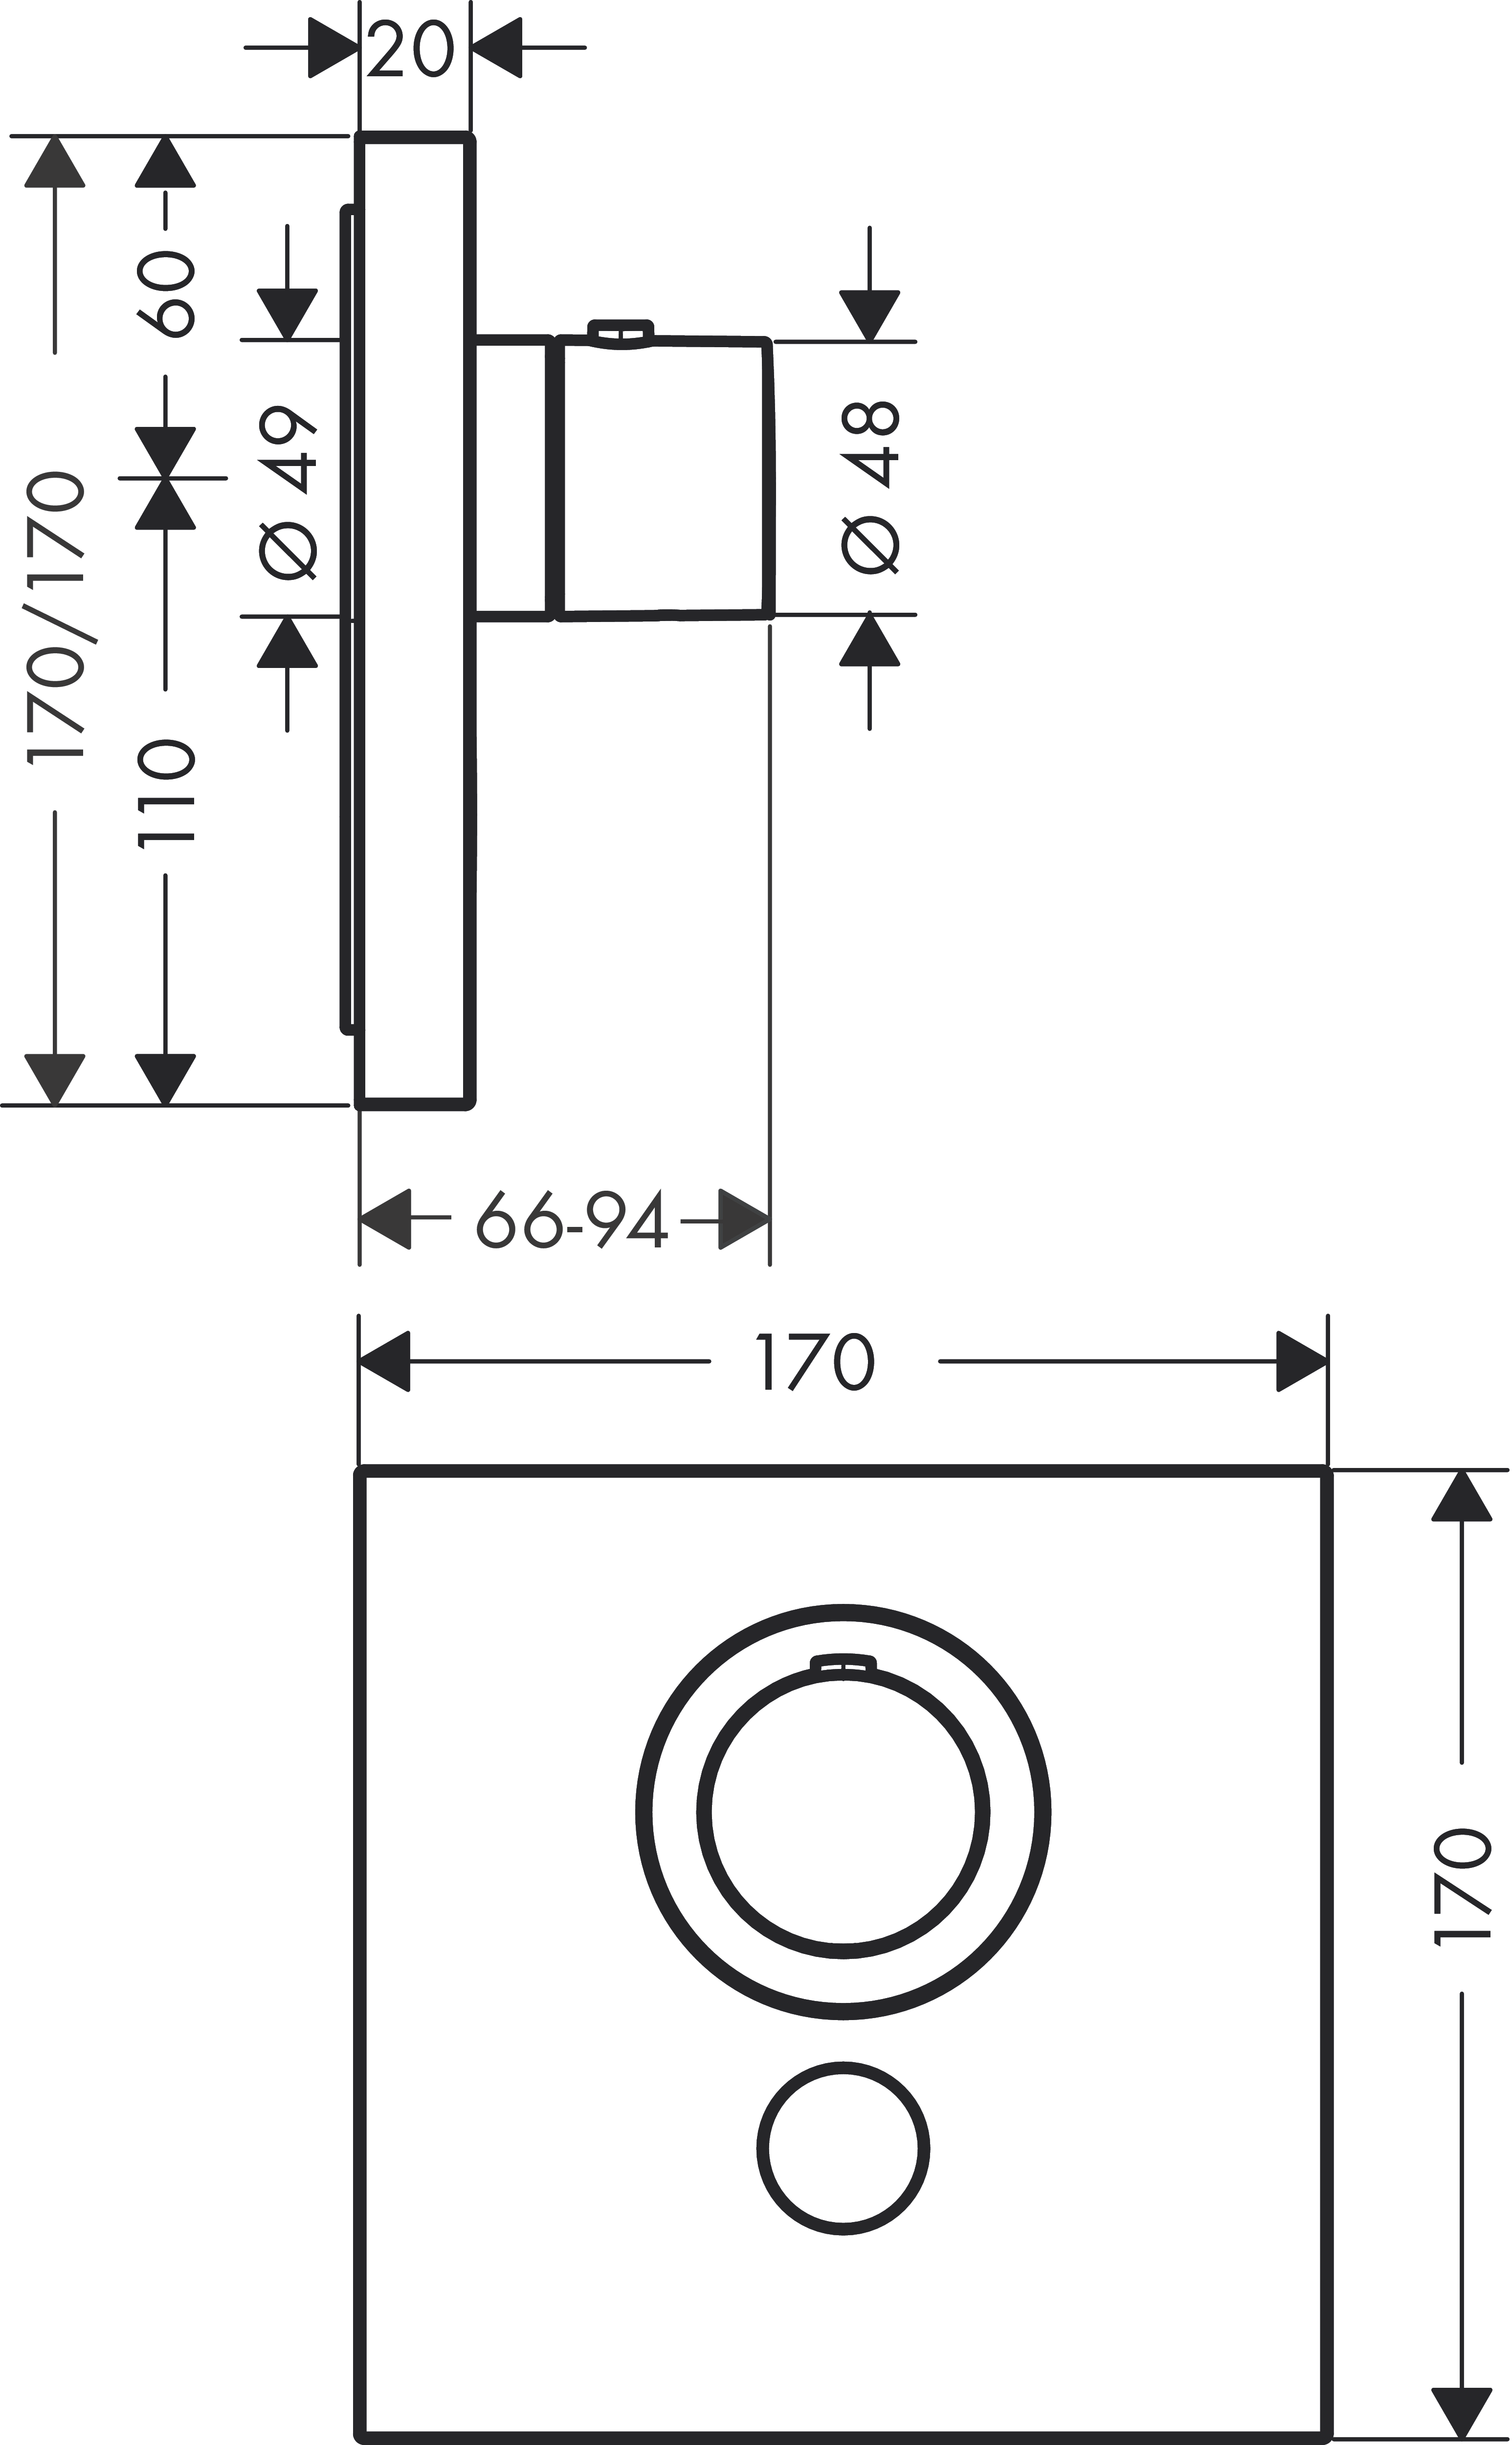 Thermostat UP Axor ShowerSelect Highflow FS 1 Verbraucher quadr.chrom